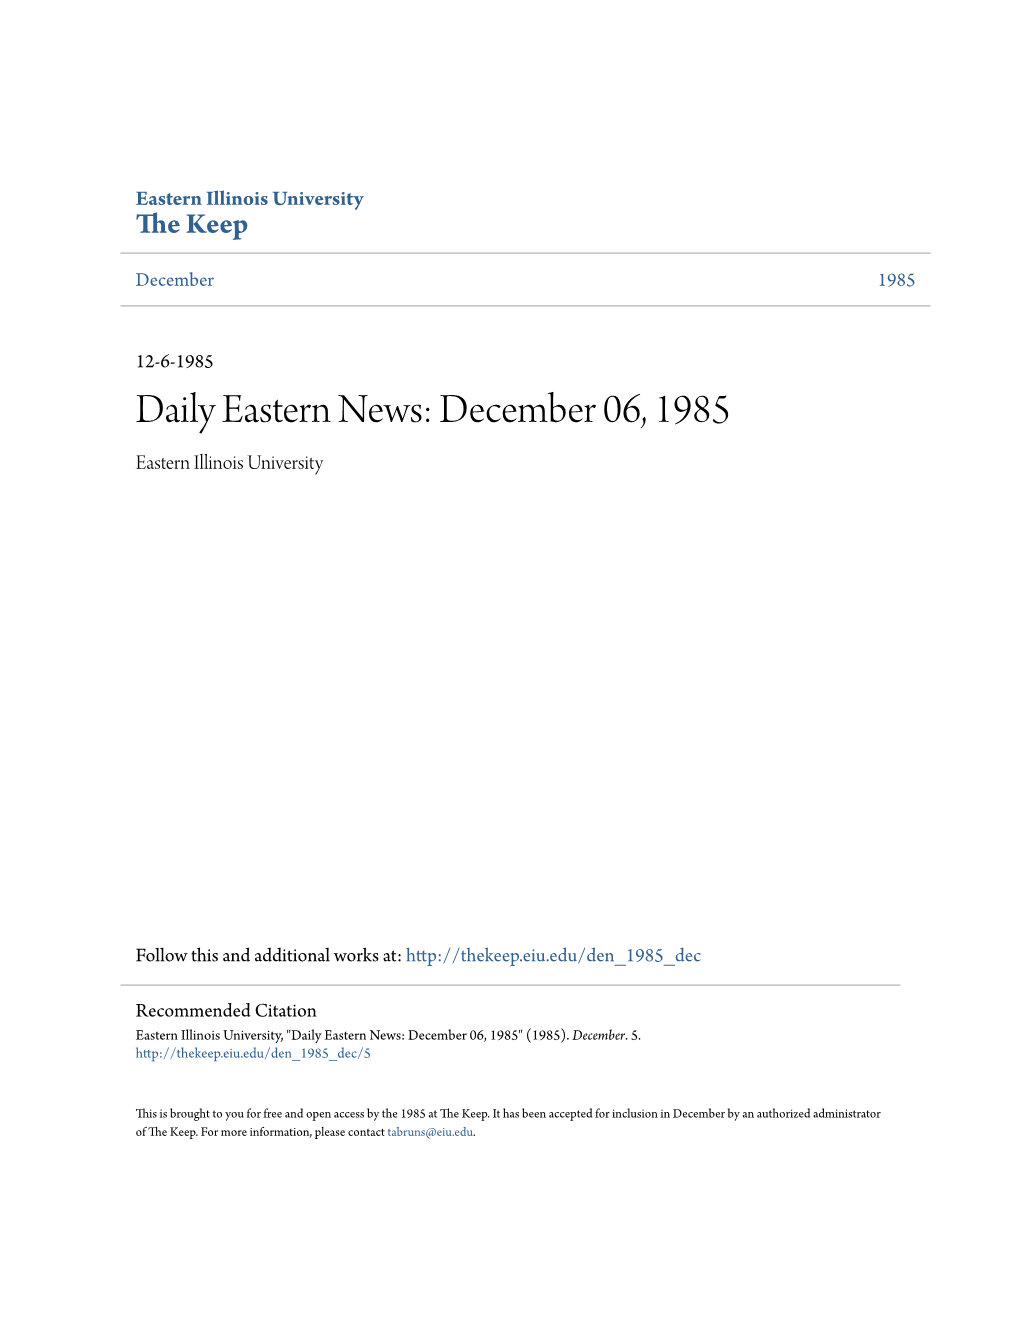 Daily Eastern News: December 06, 1985 Eastern Illinois University